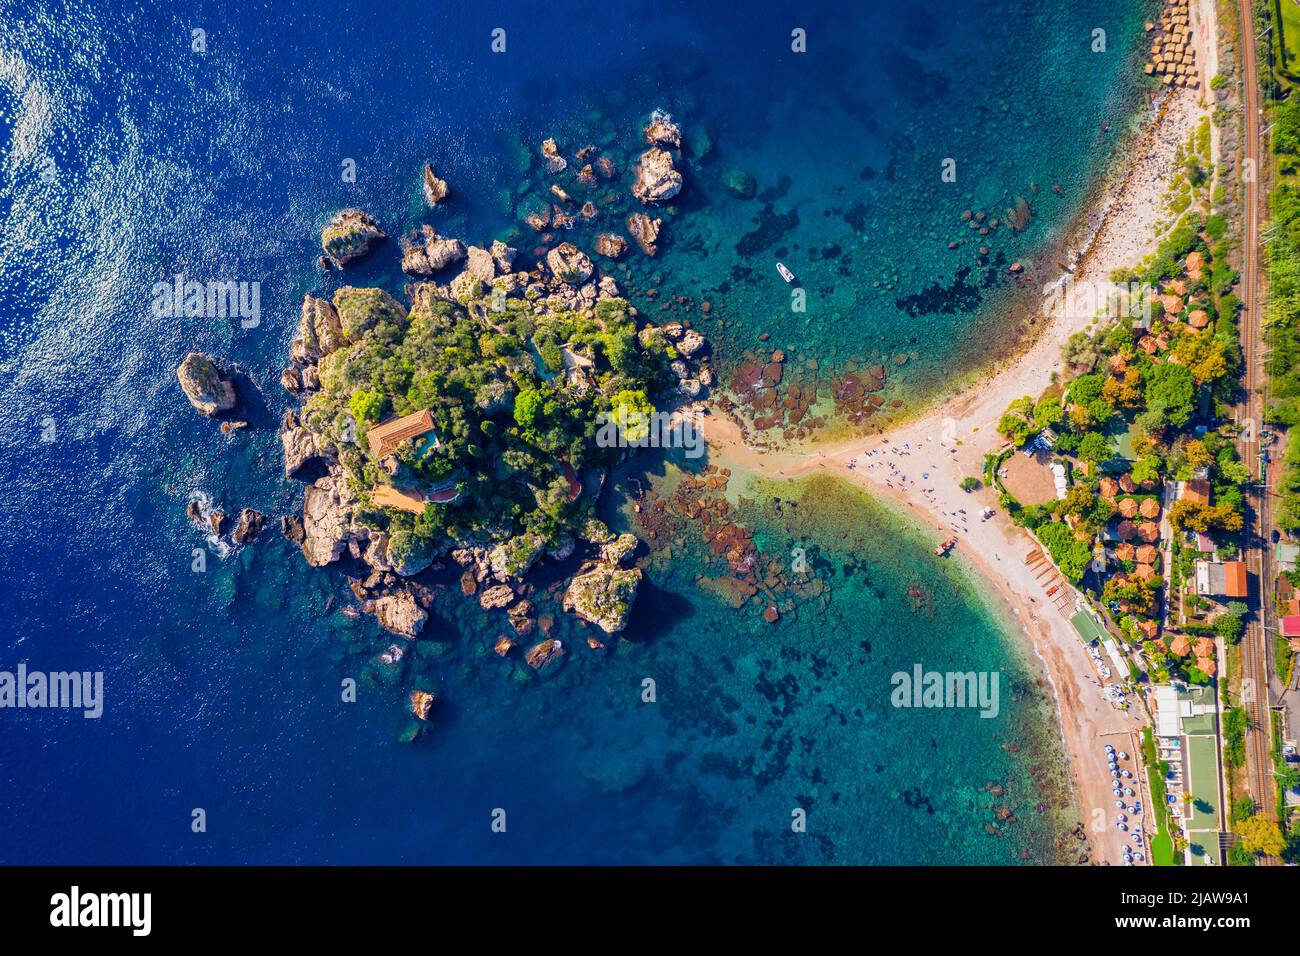 Aerial view of Isola Bella in Taormina, Sicily, Italy. Isola Bella is small island near Taormina, Sicily, Italy. Narrow path connects island to mainla Stock Photo